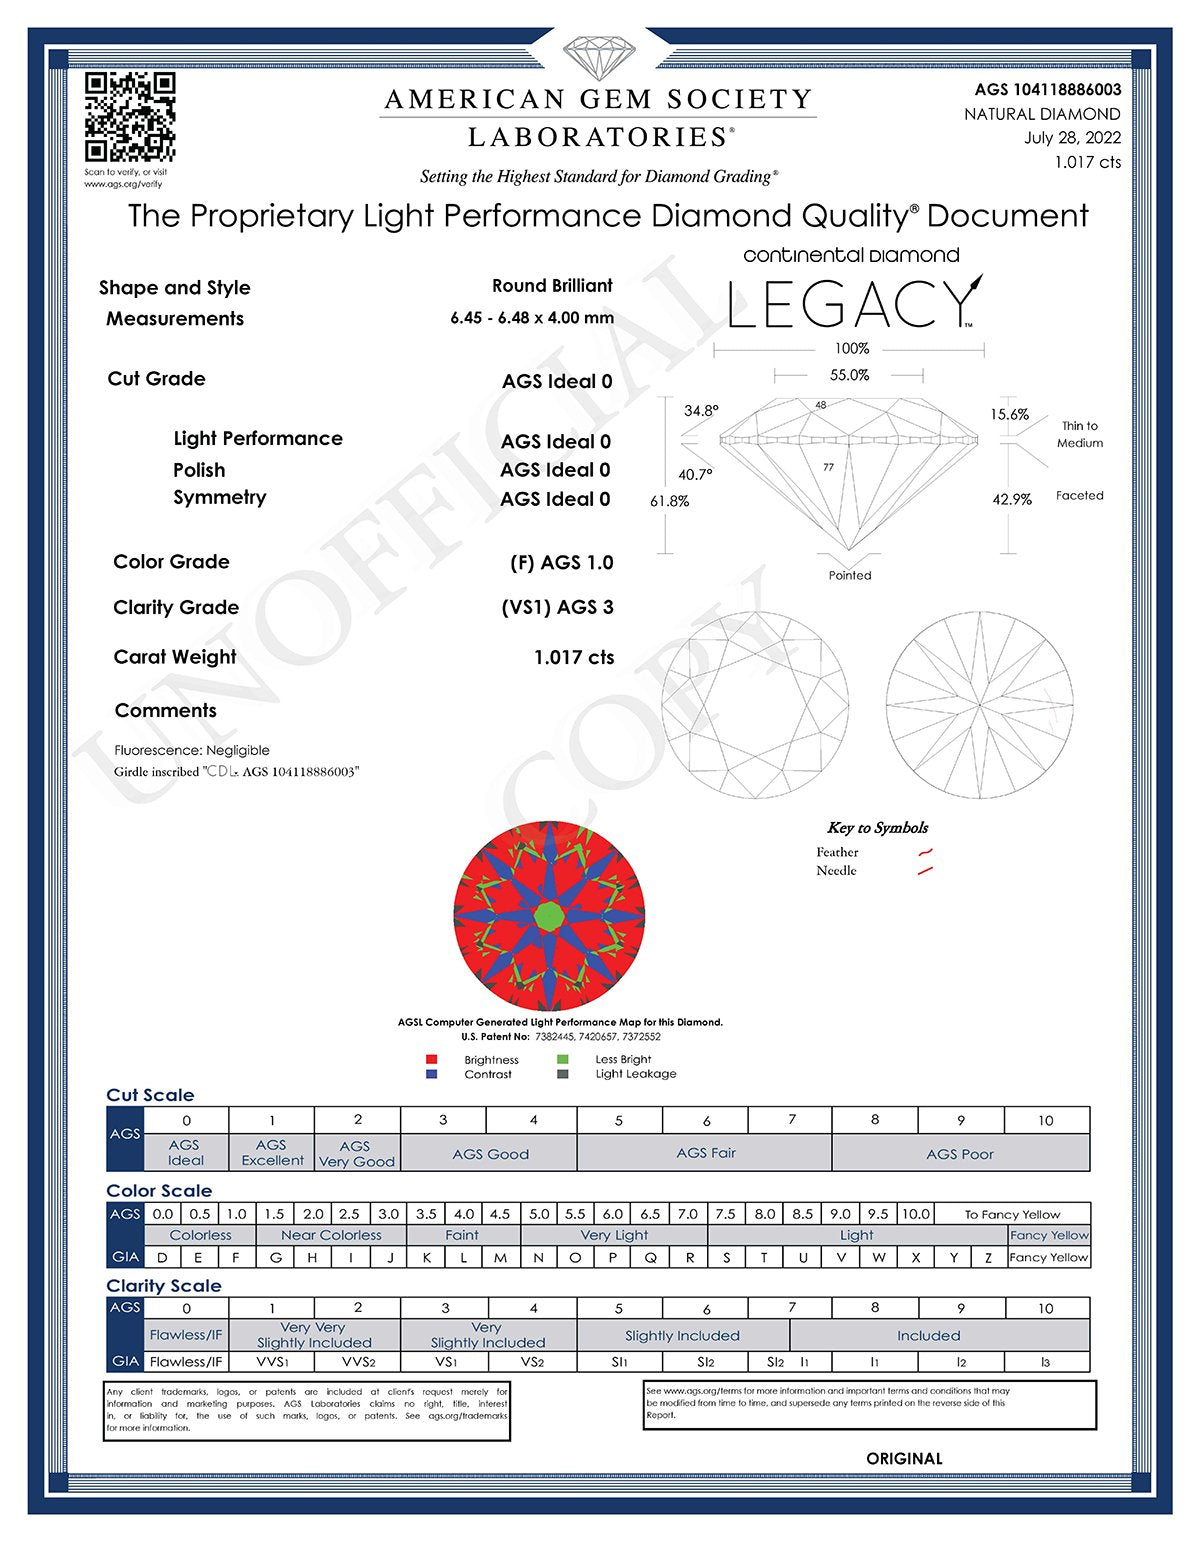 1.01 F/VS1 AGS LEGACY - Continental Diamond